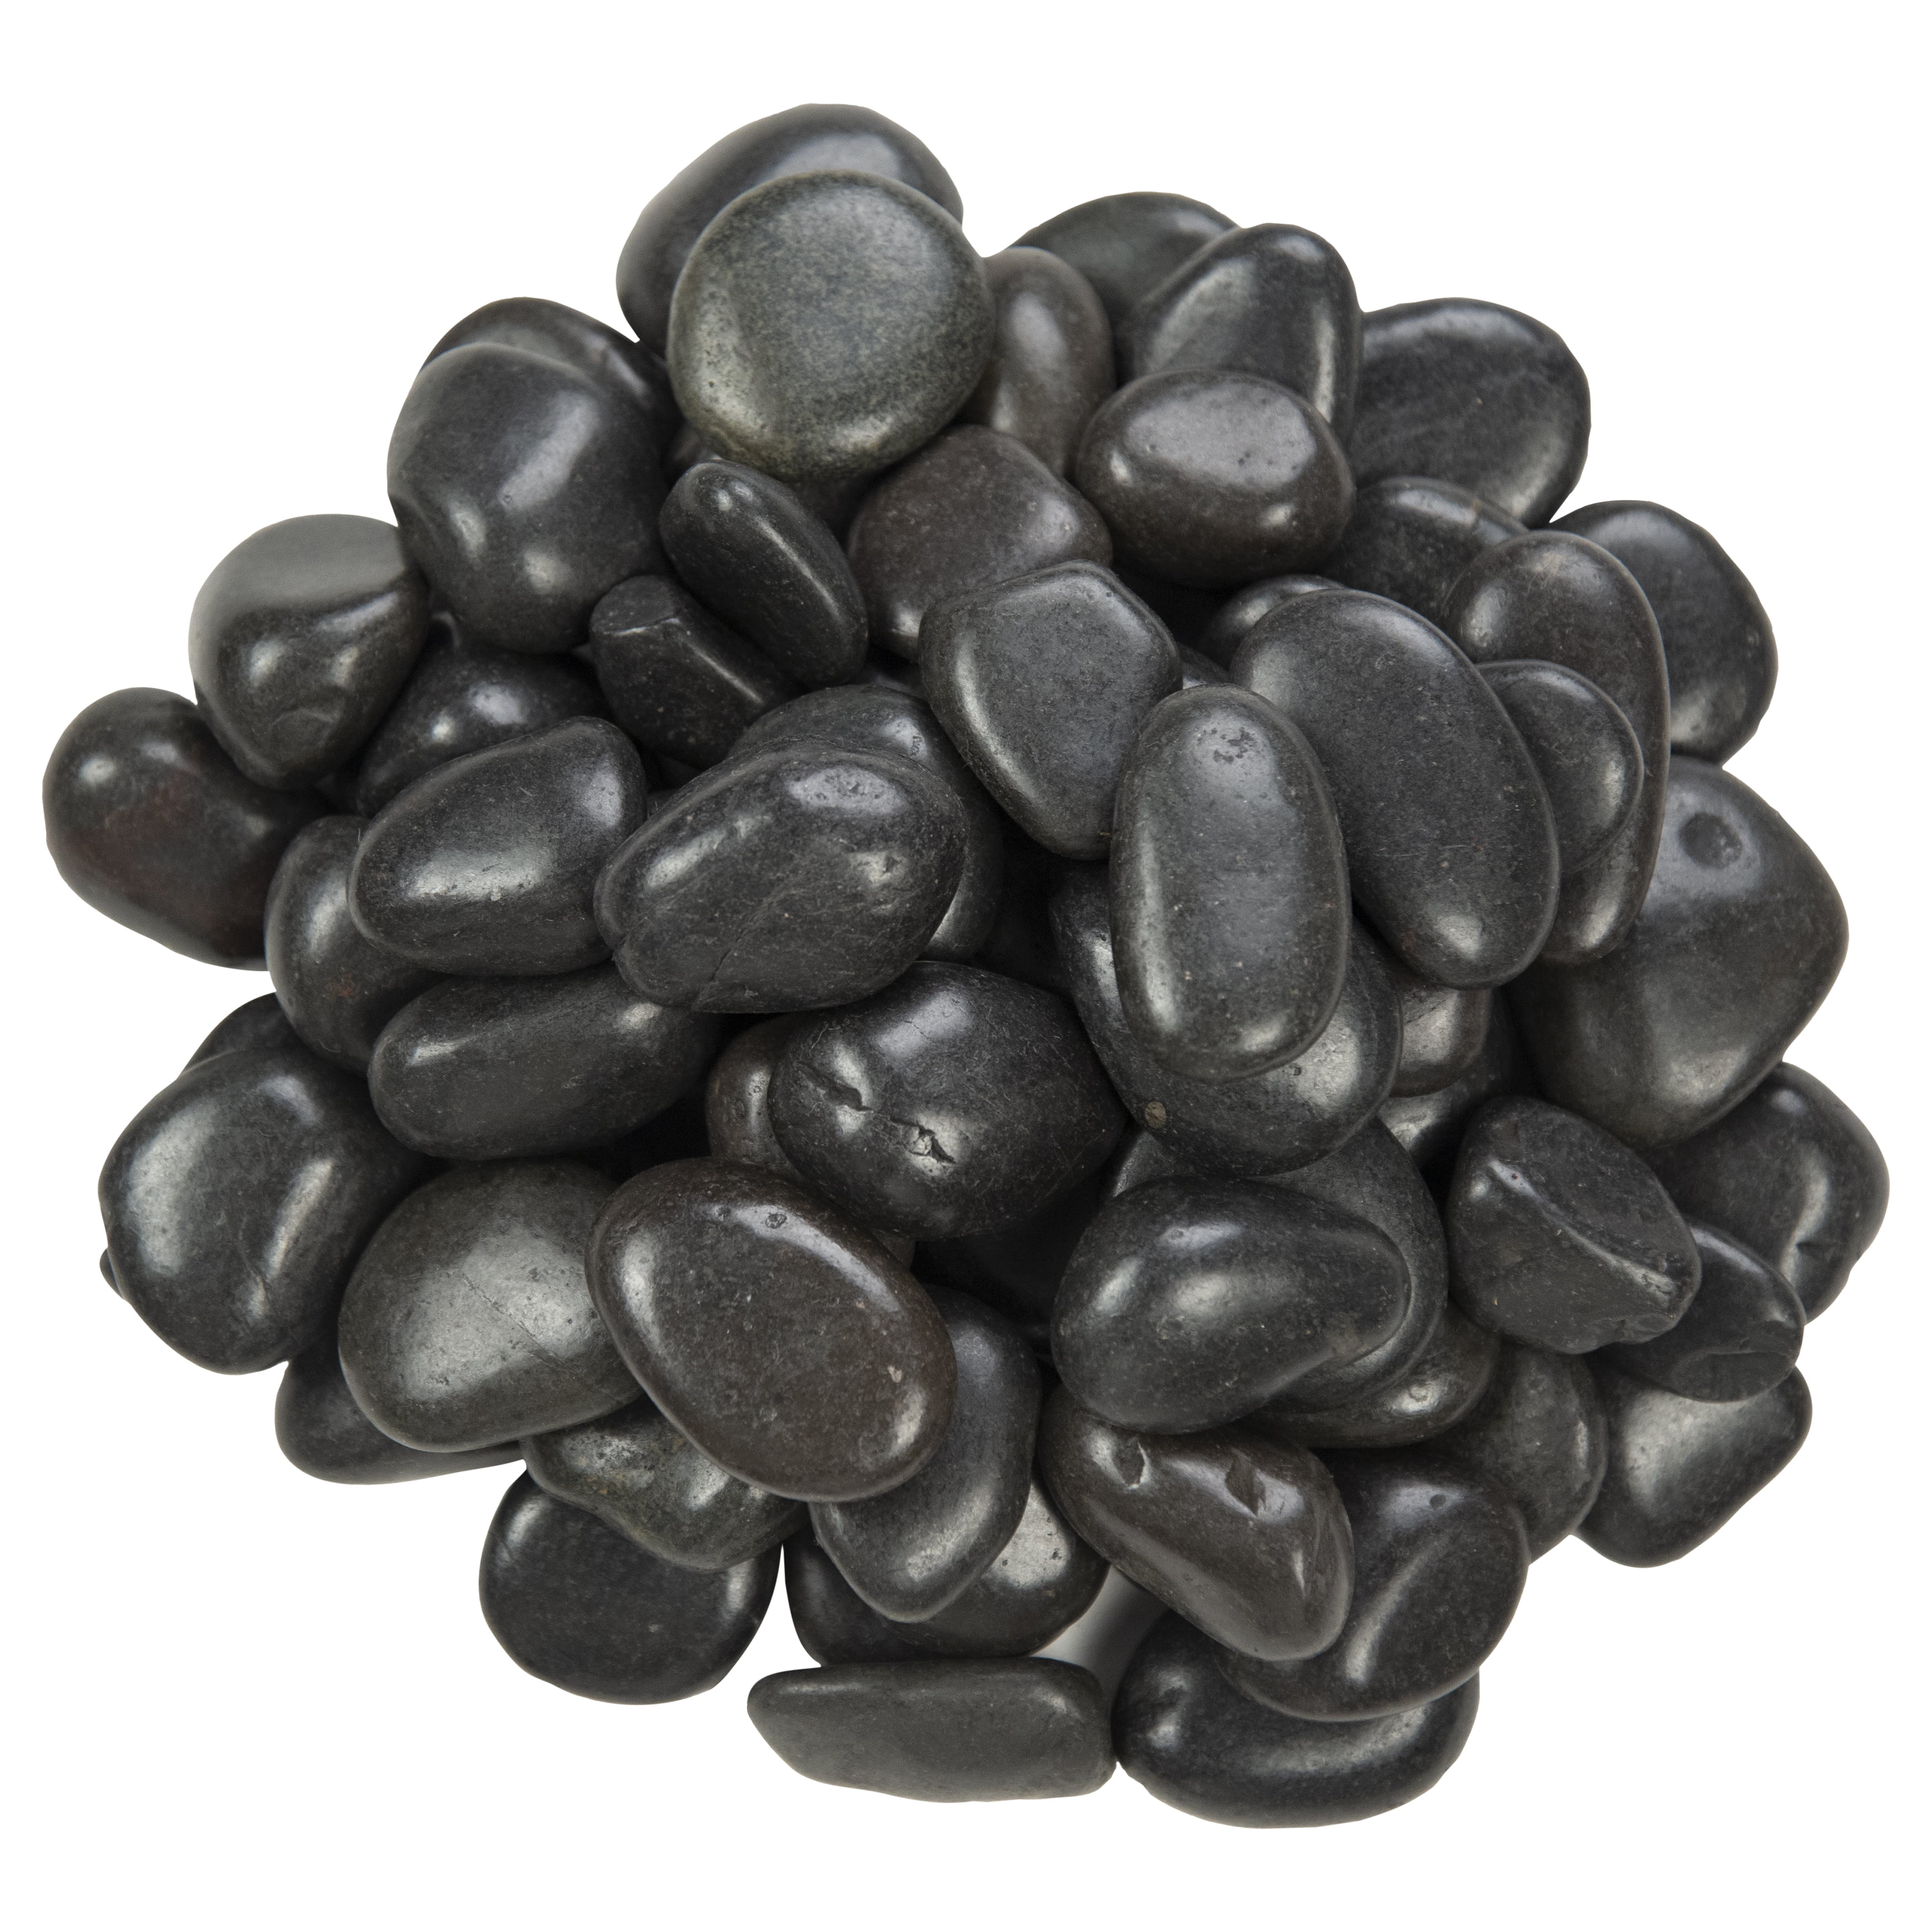 Large Black 10 lb 10Lb Decorative Polished Pebbles/River Rocks/Aquarium Gravel 